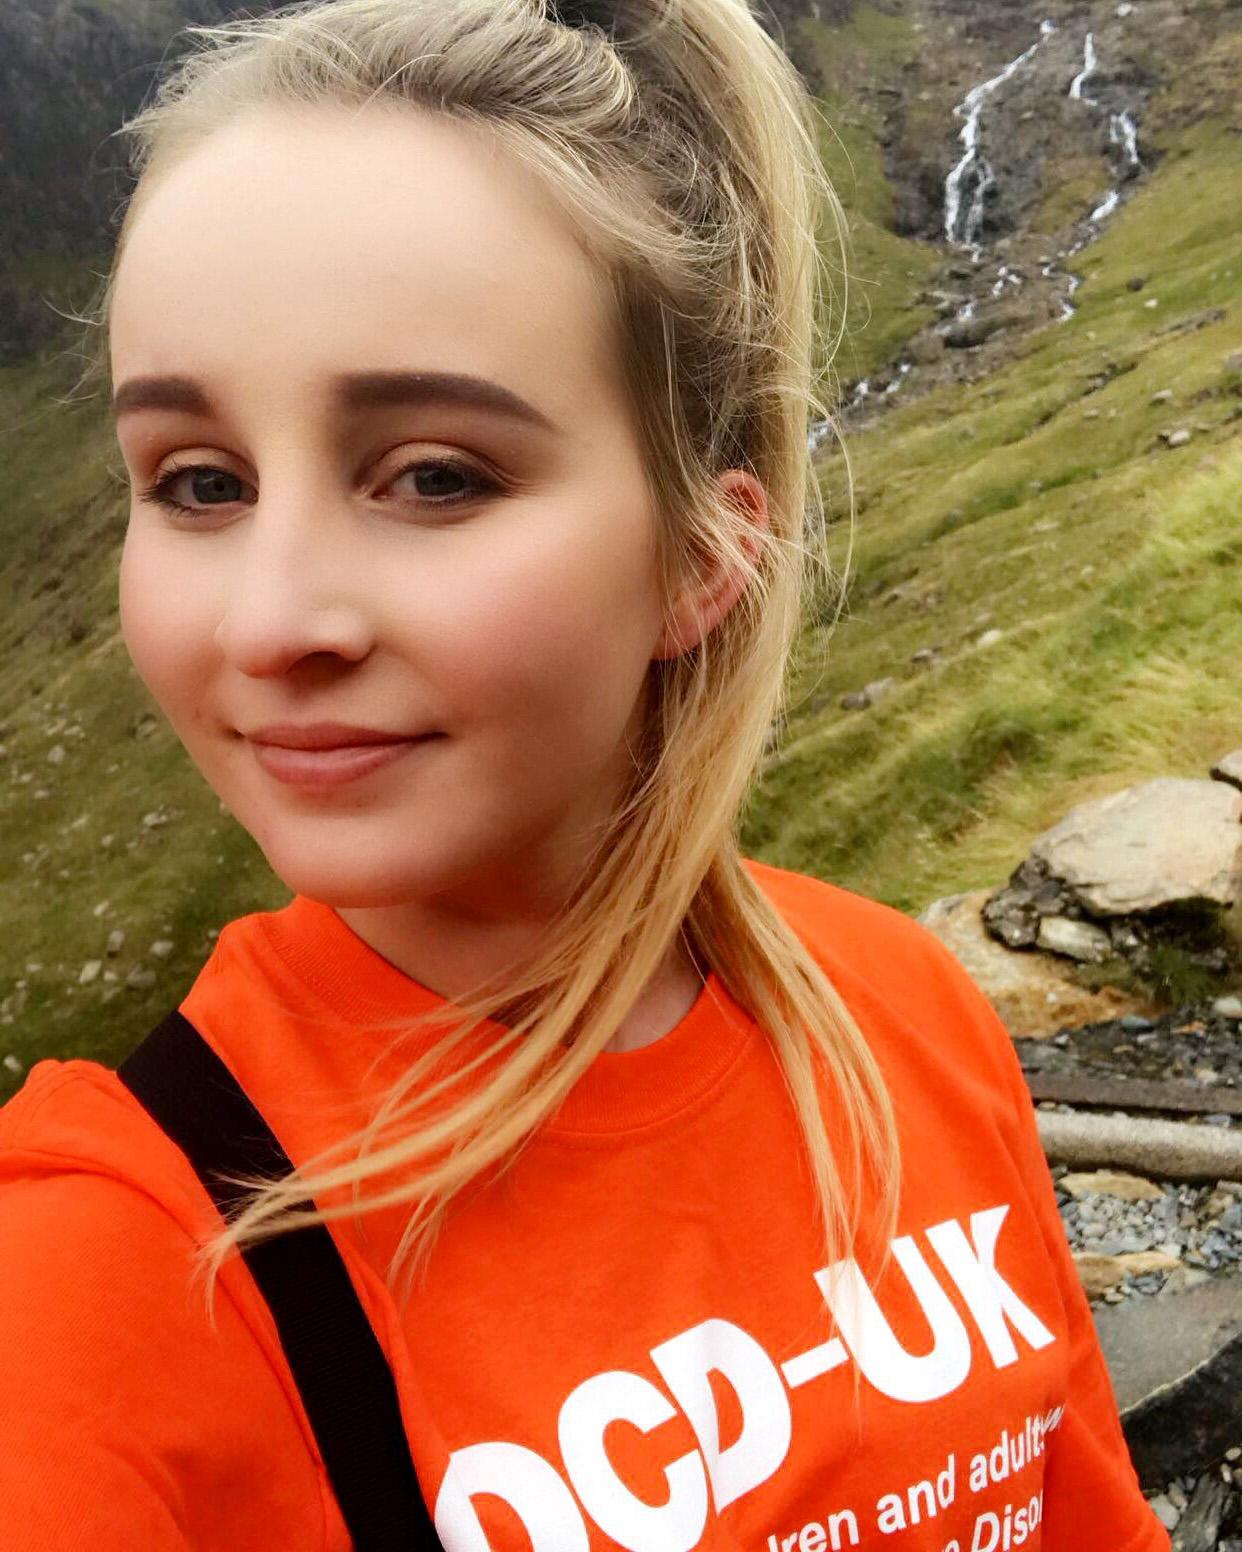 Hannah Nelson wearing an OCD orange t-shirt